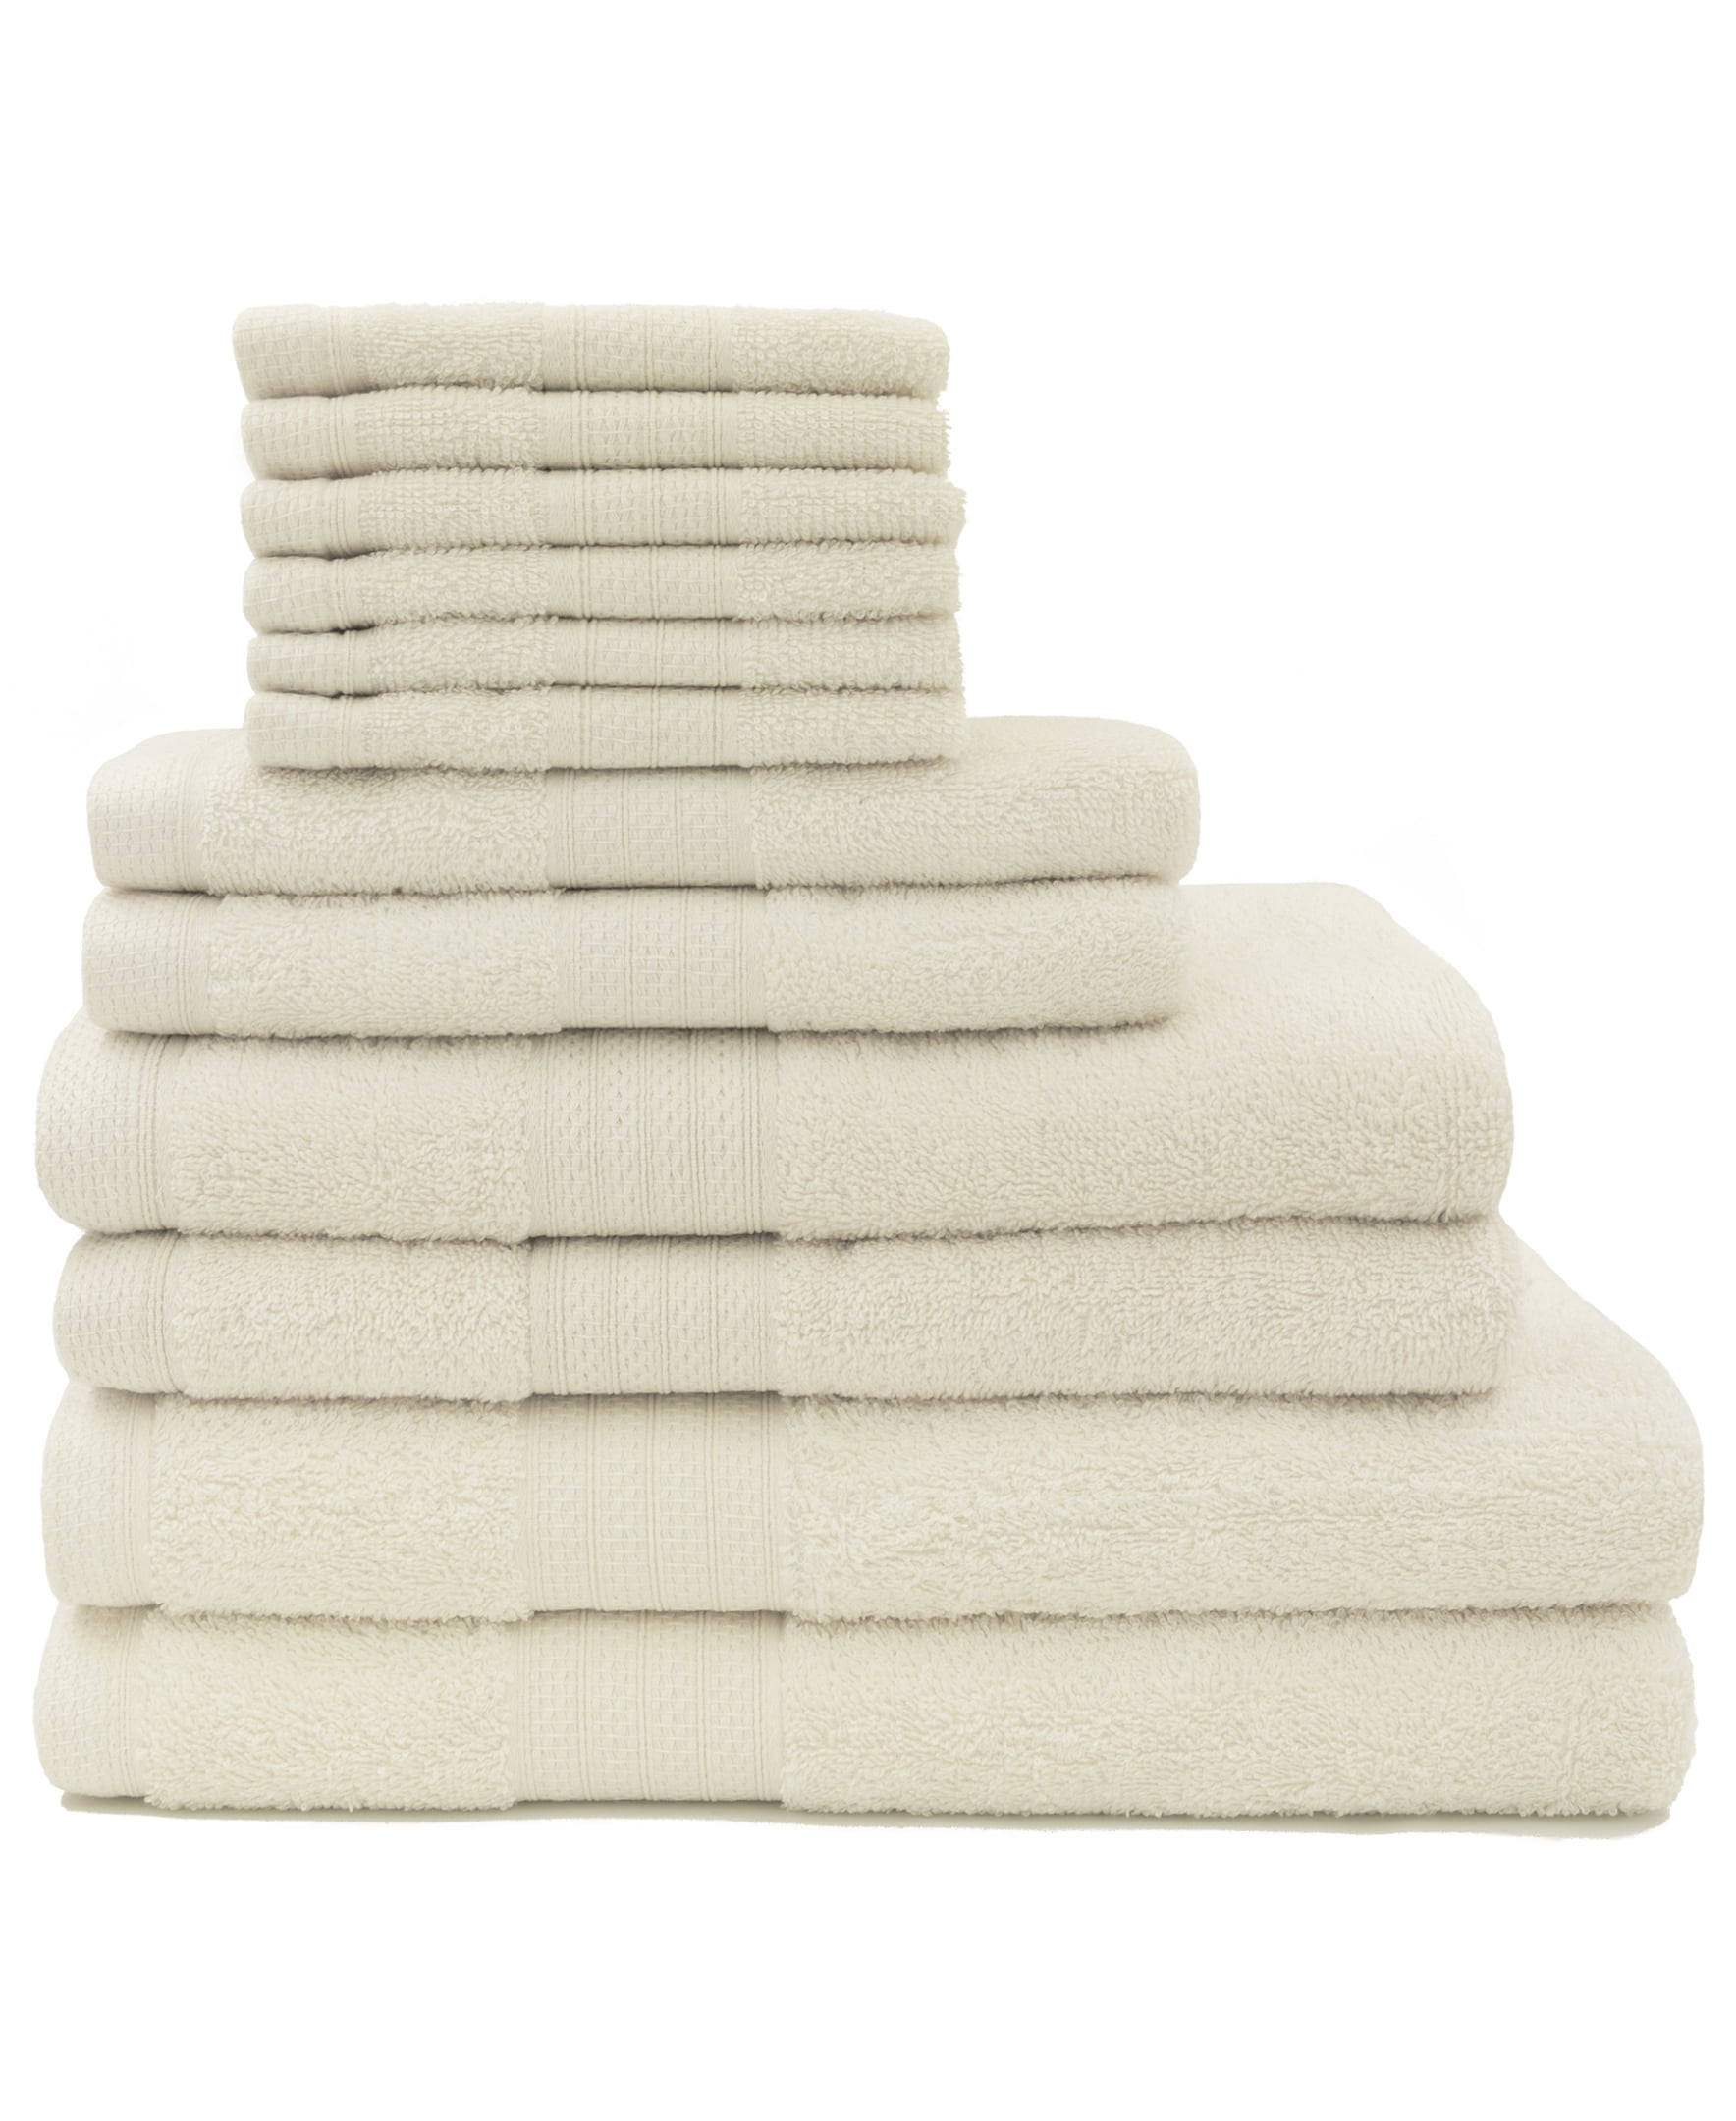 Baltic Linen Company 100-percent Cotton Luxury 12-Piece Towel Set, Cream